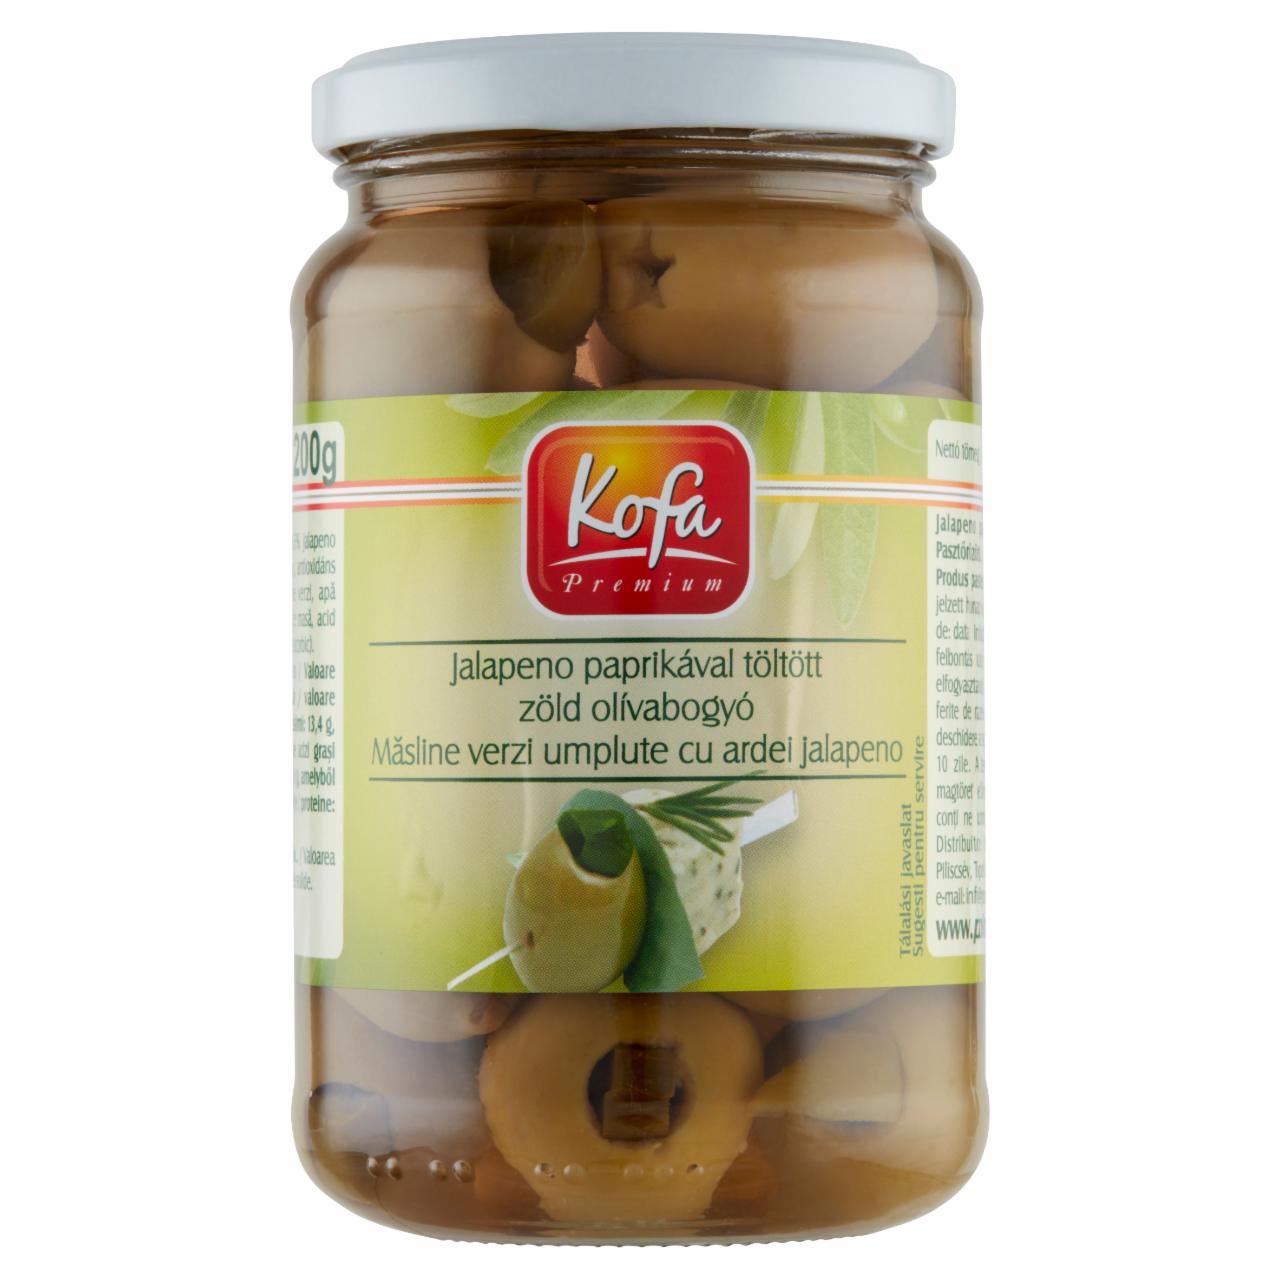 Képek - Kofa jalapeno paprikával töltött zöld olívabogyó 350 g